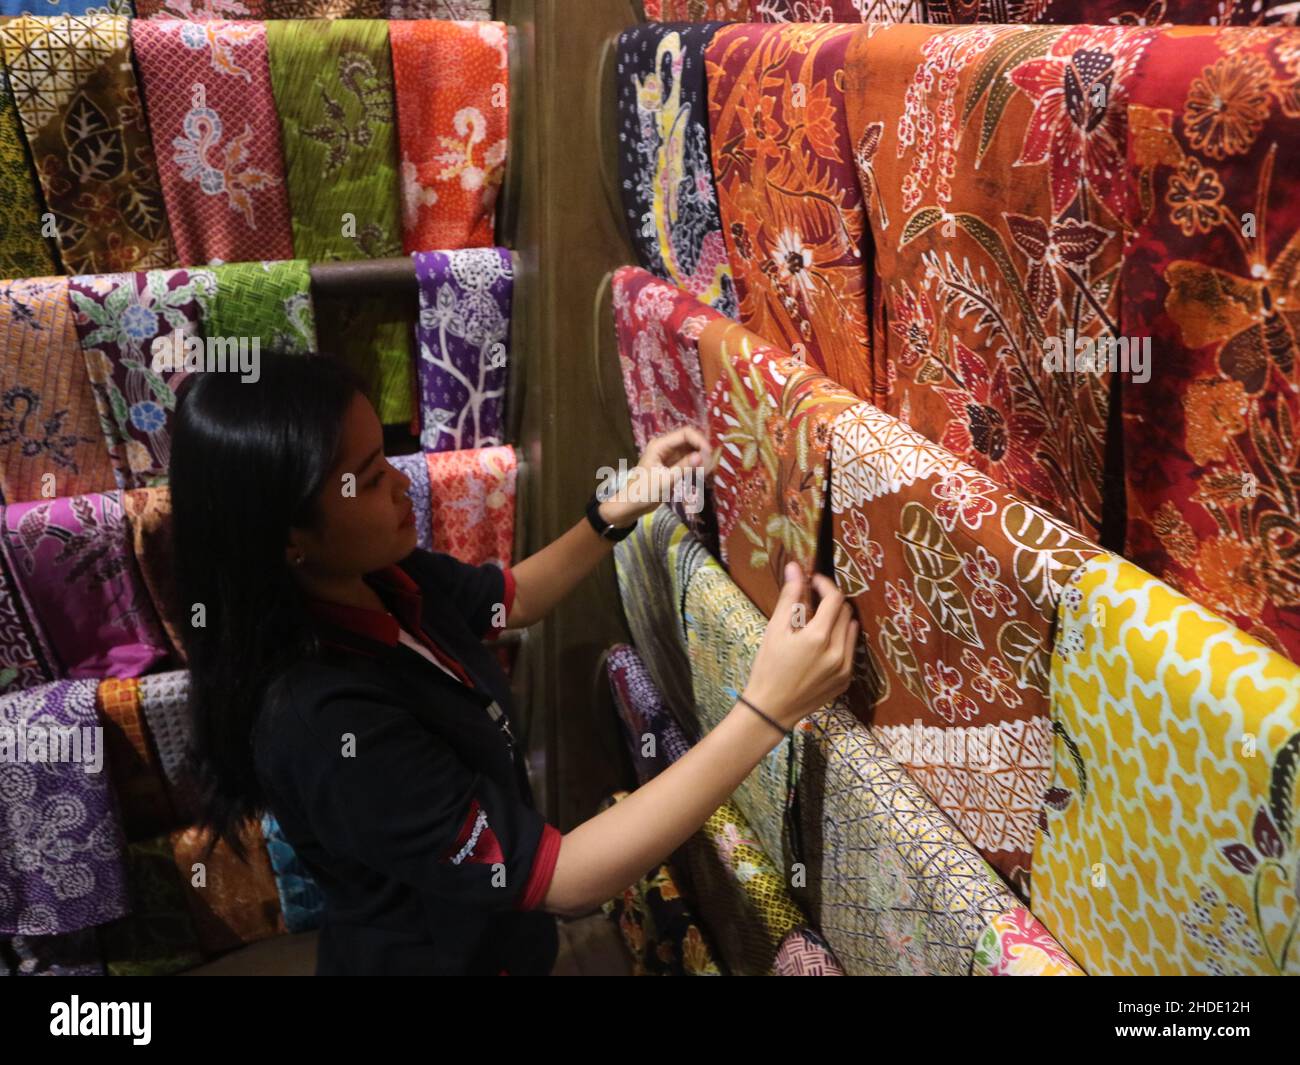 Banyuwangi, Indonesia - March 20, 2018: Original Indonesian batik at one of the batik sales centers Stock Photo